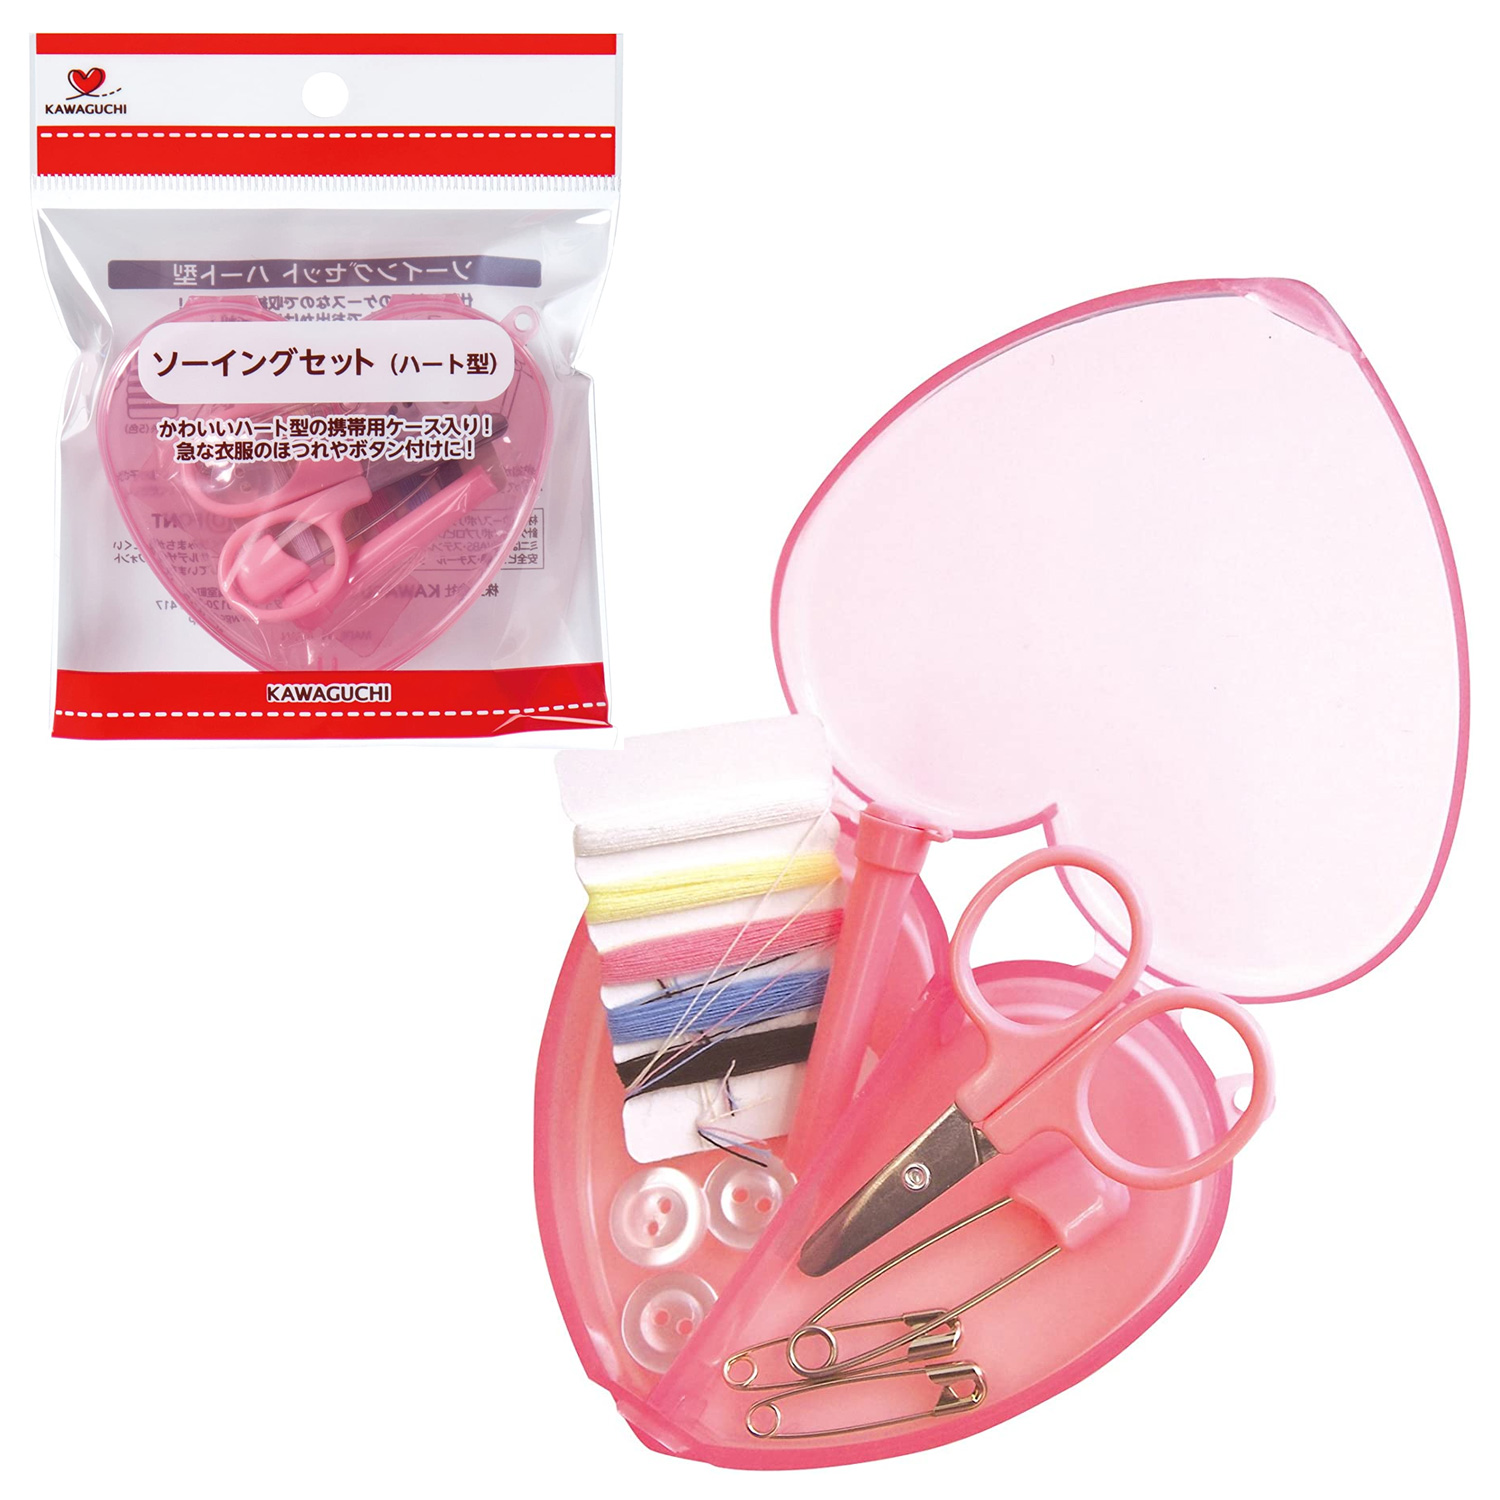 TK13283 KAWAGUCHI Sewing Set, heart-shaped, pink (pcs)